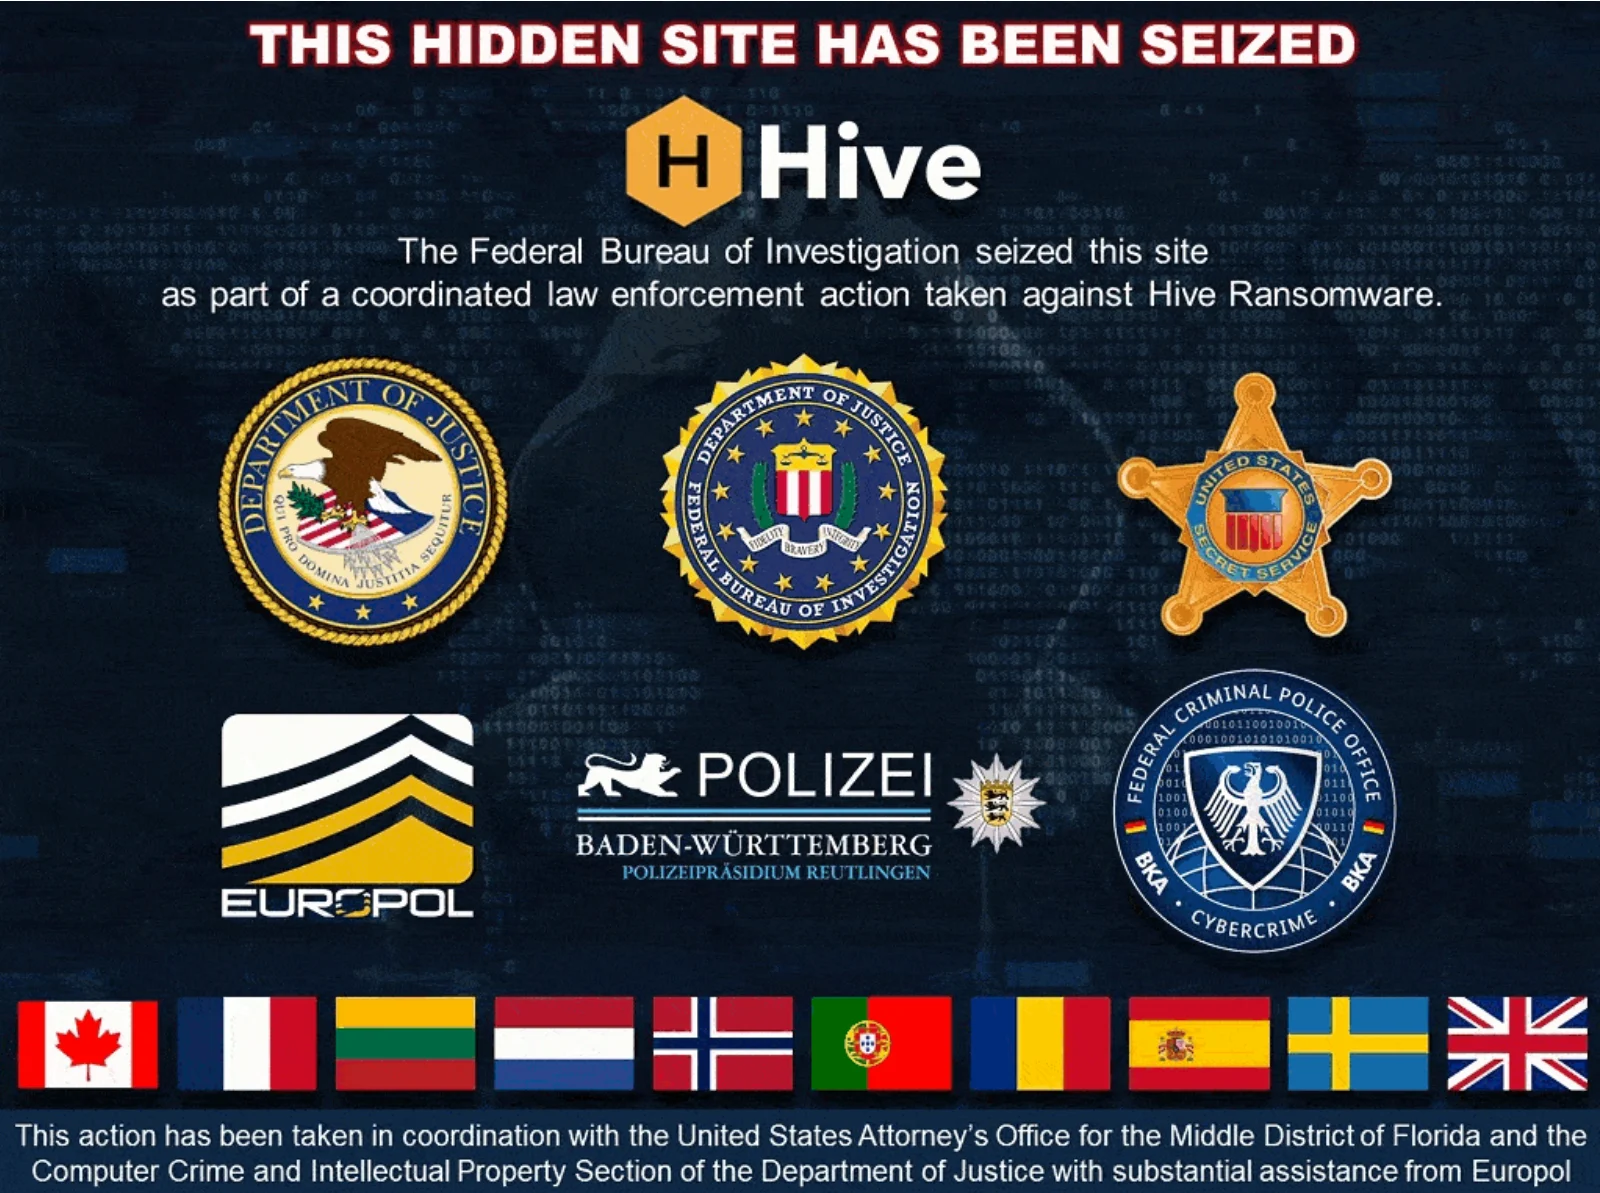 Seizure notice left by the FBI on Hive Tor website